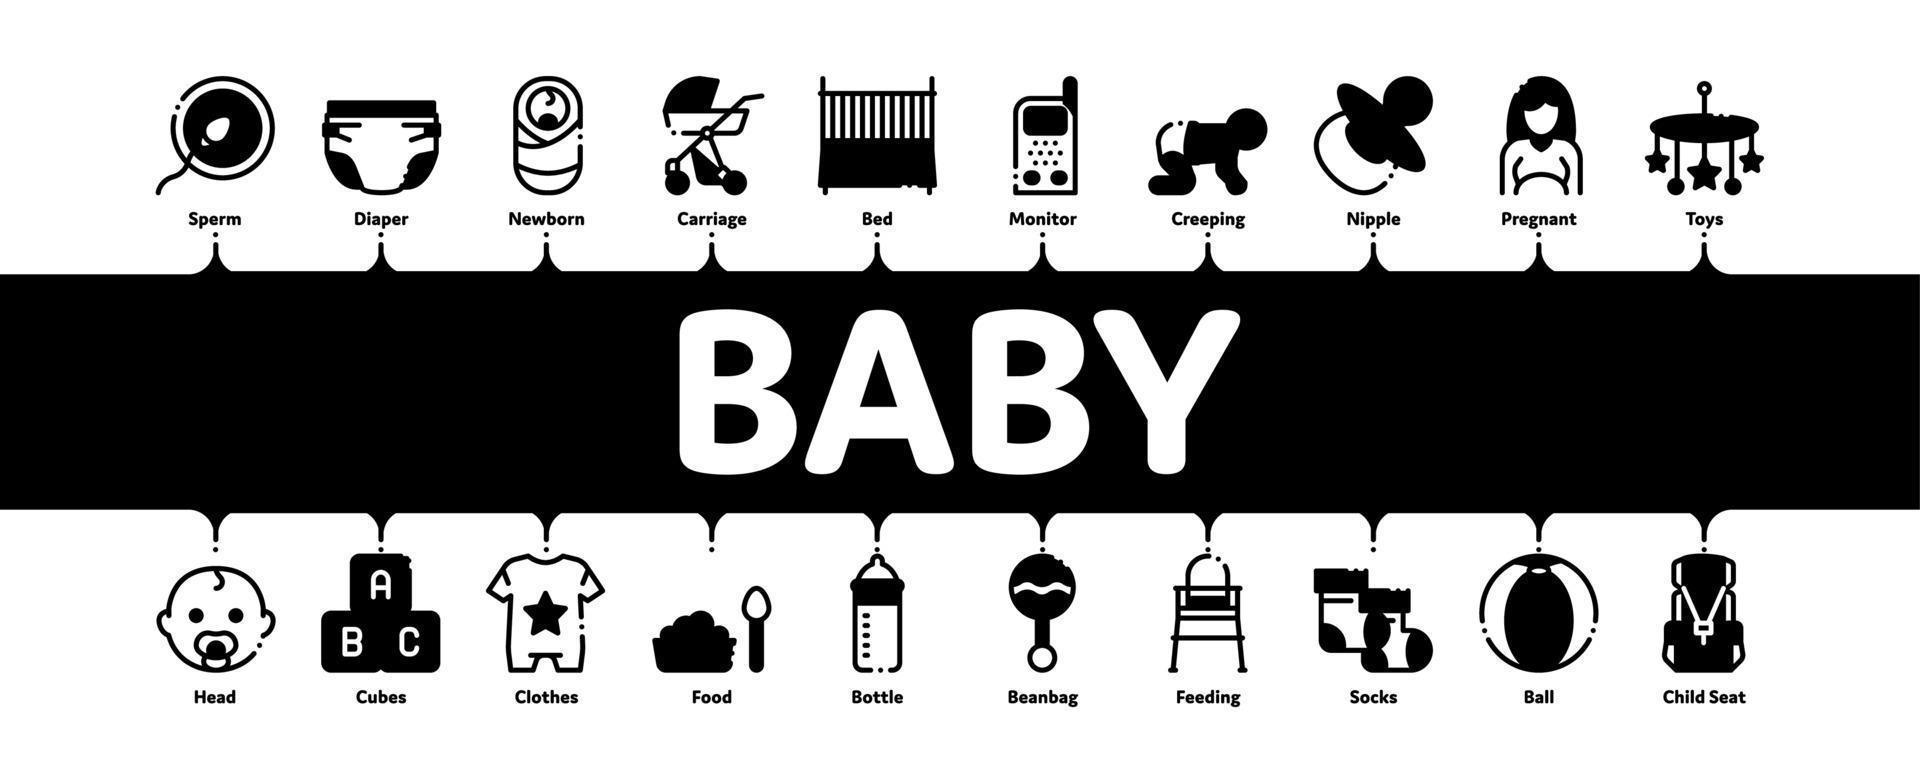 roupas de bebê e ferramentas vetor mínimo de banner infográfico